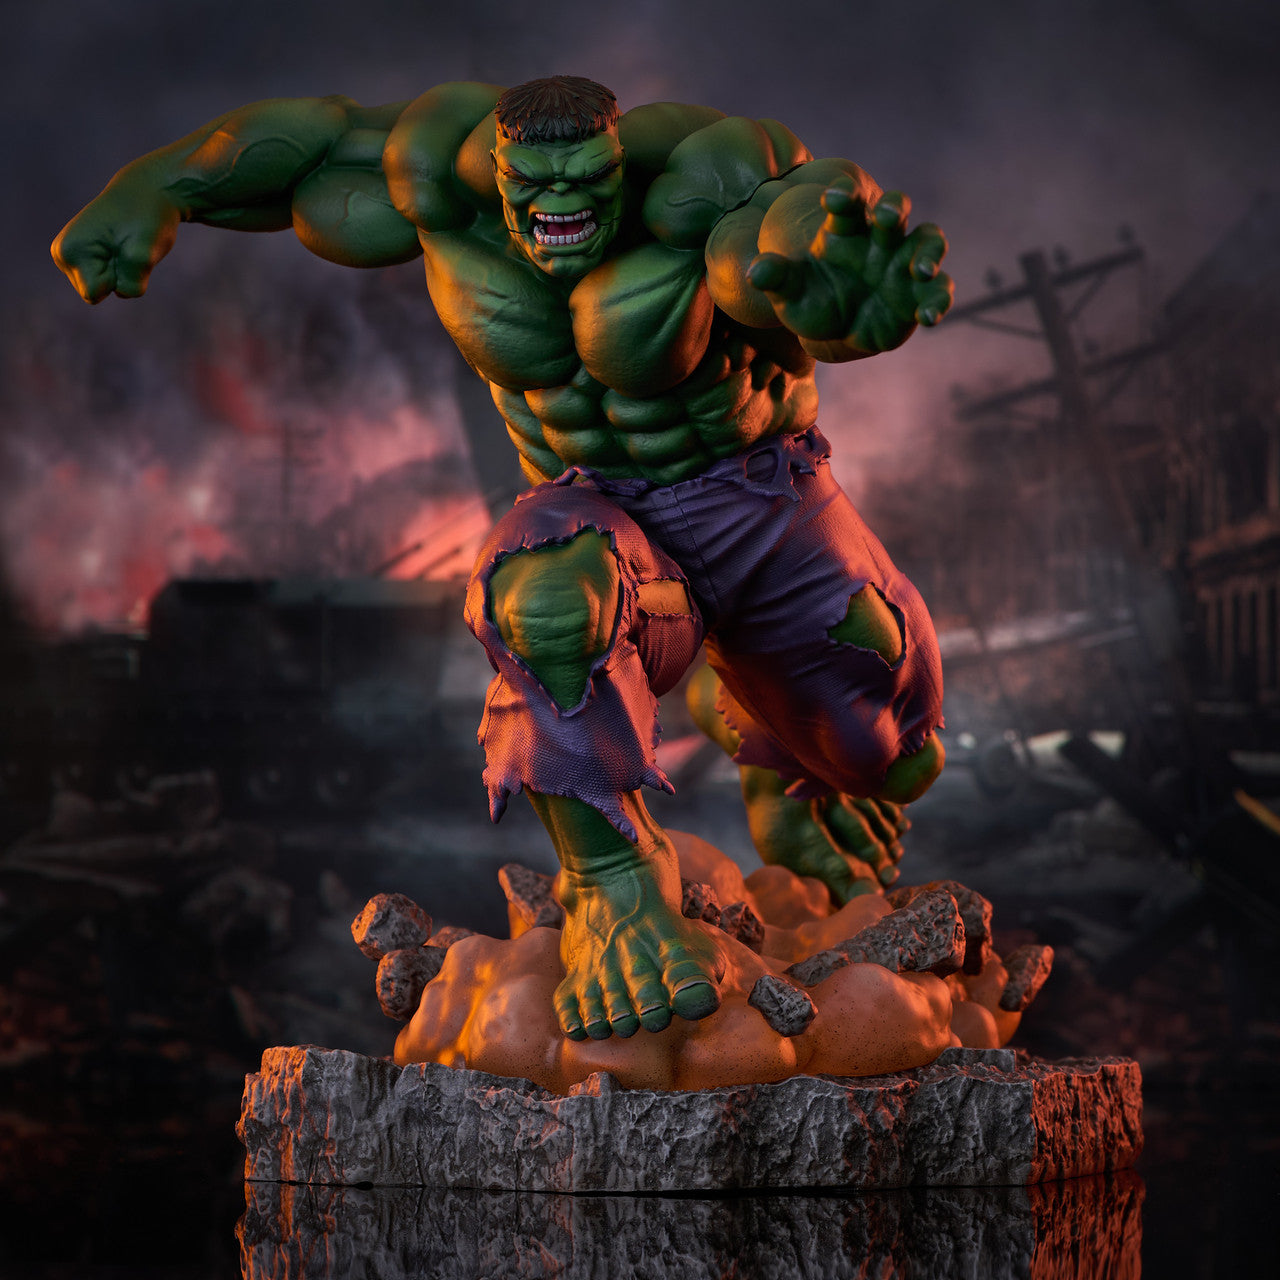 Marvel Gallery Comic Immortal Hulk Deluxe Statue